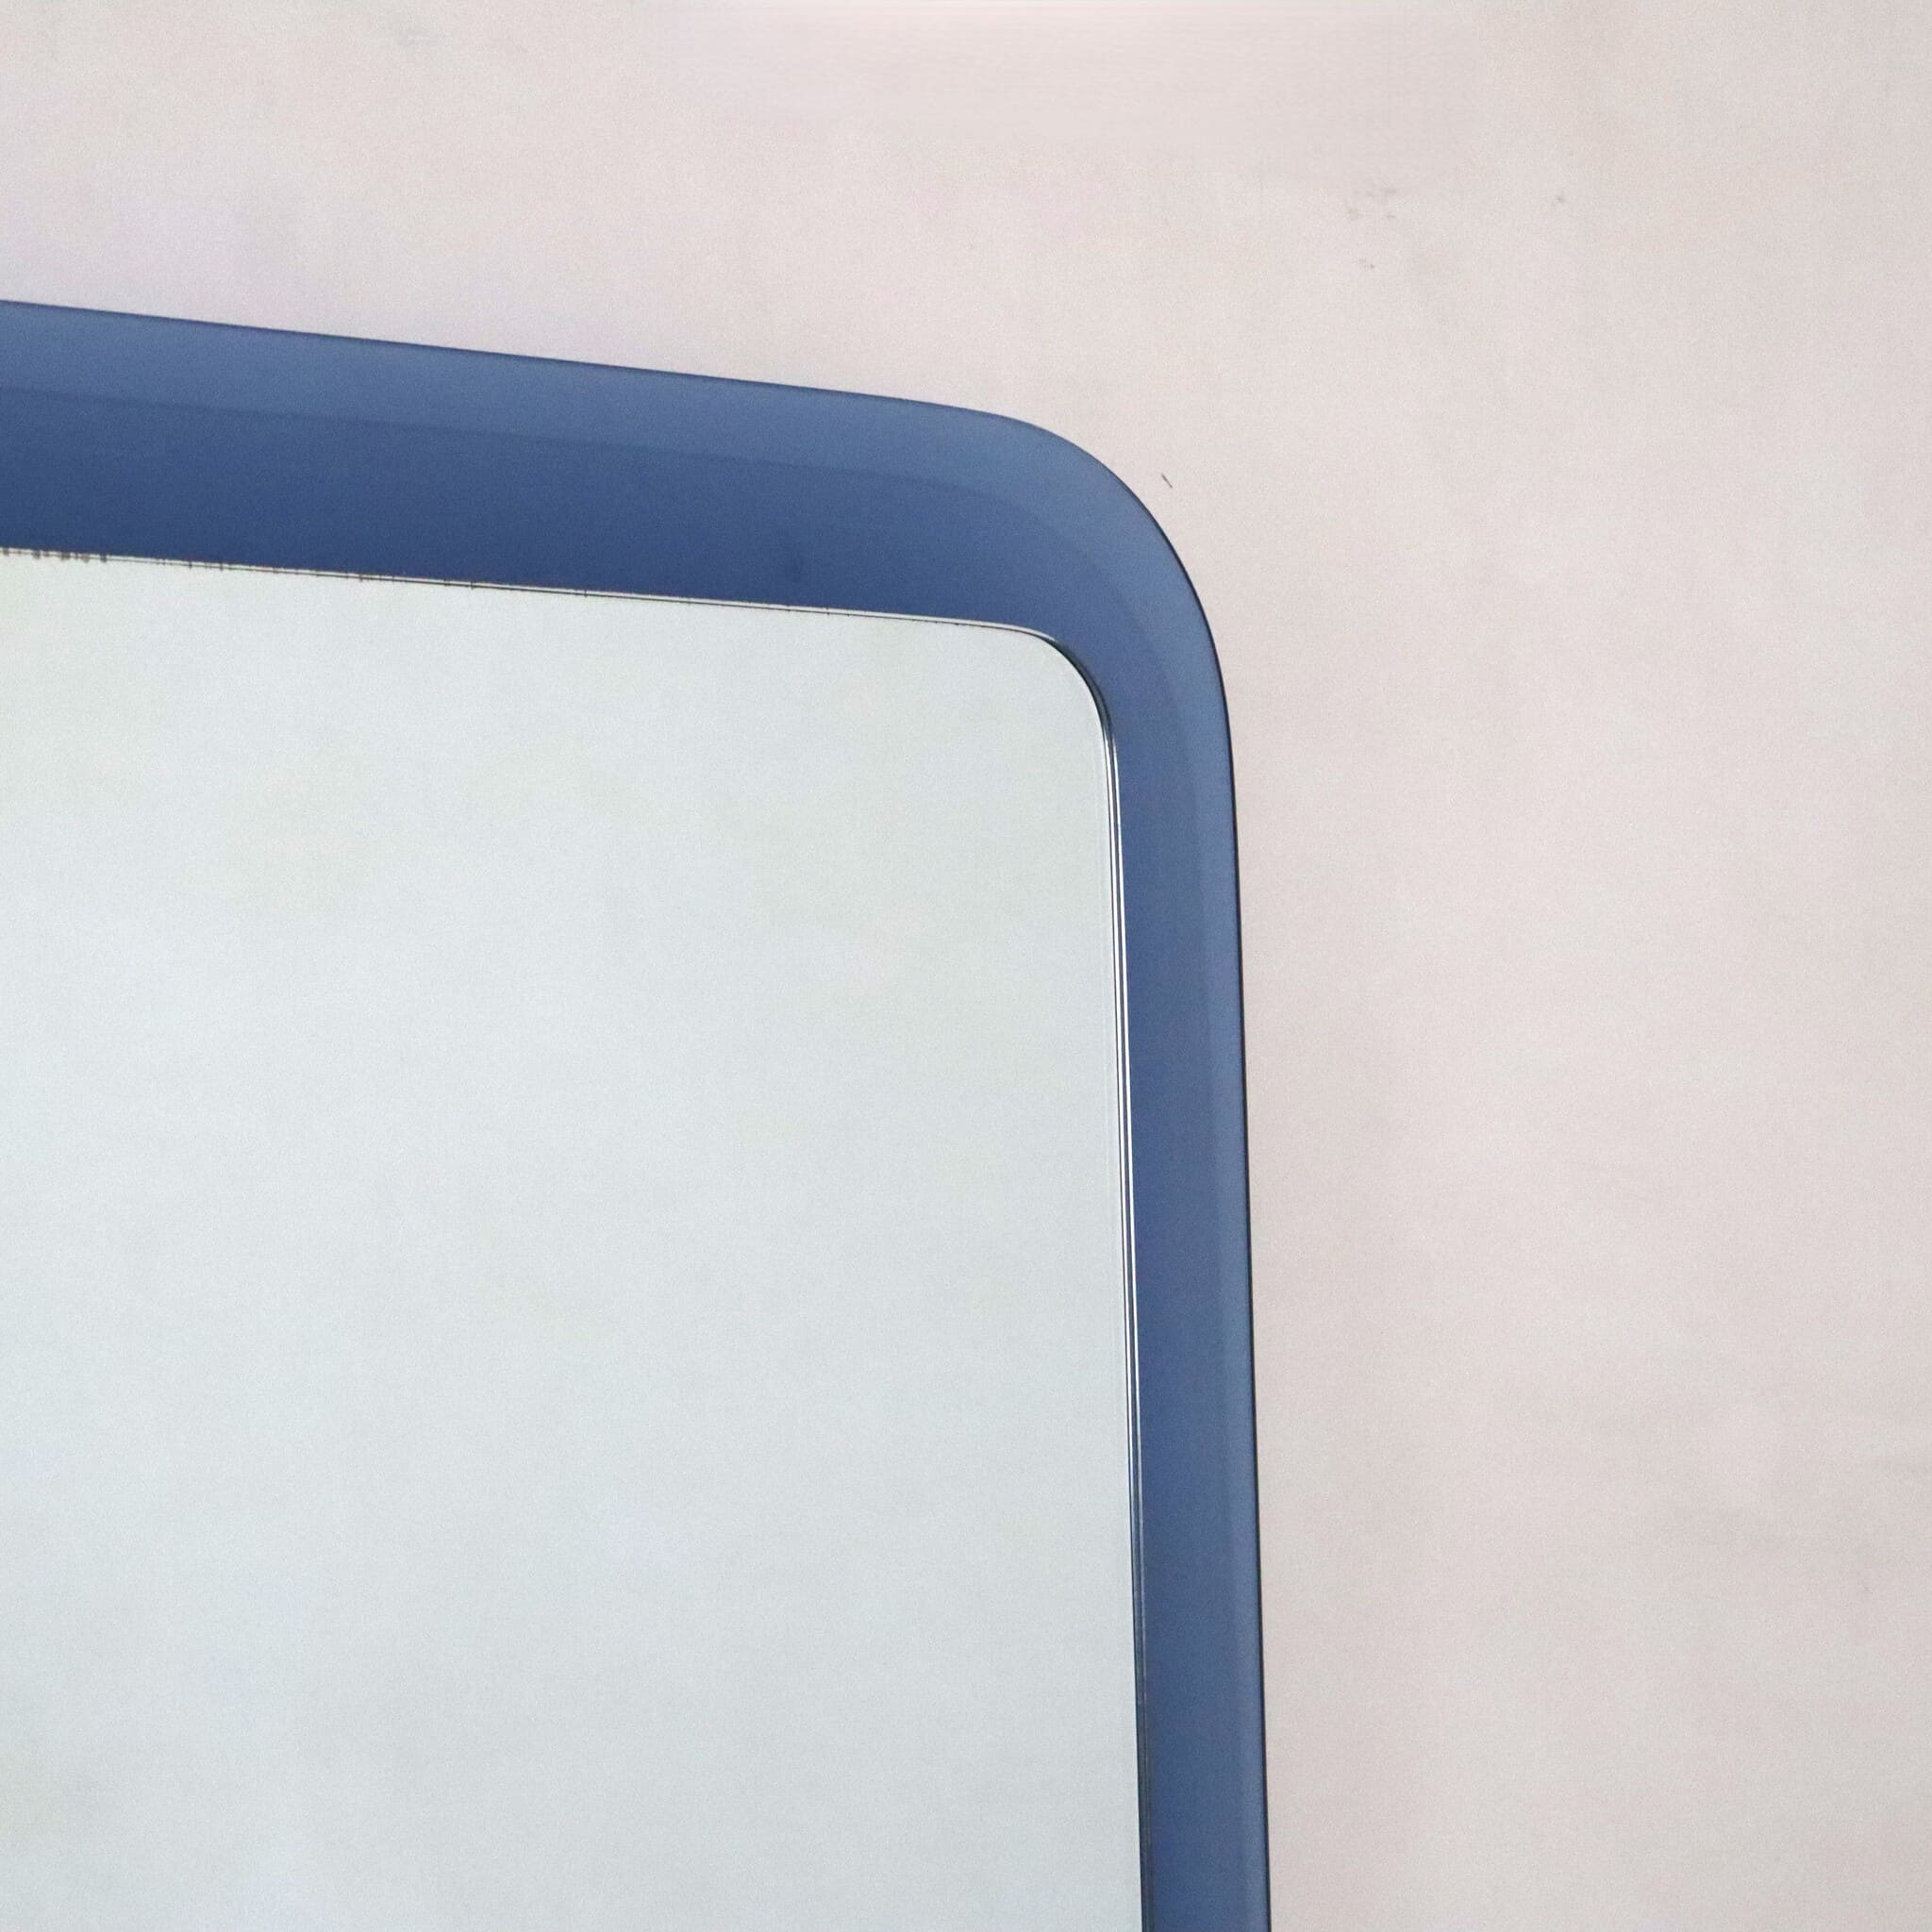 square-mirror-round-edges-cobalt-blue-70s-detail-right-corner-high-visionidepoca